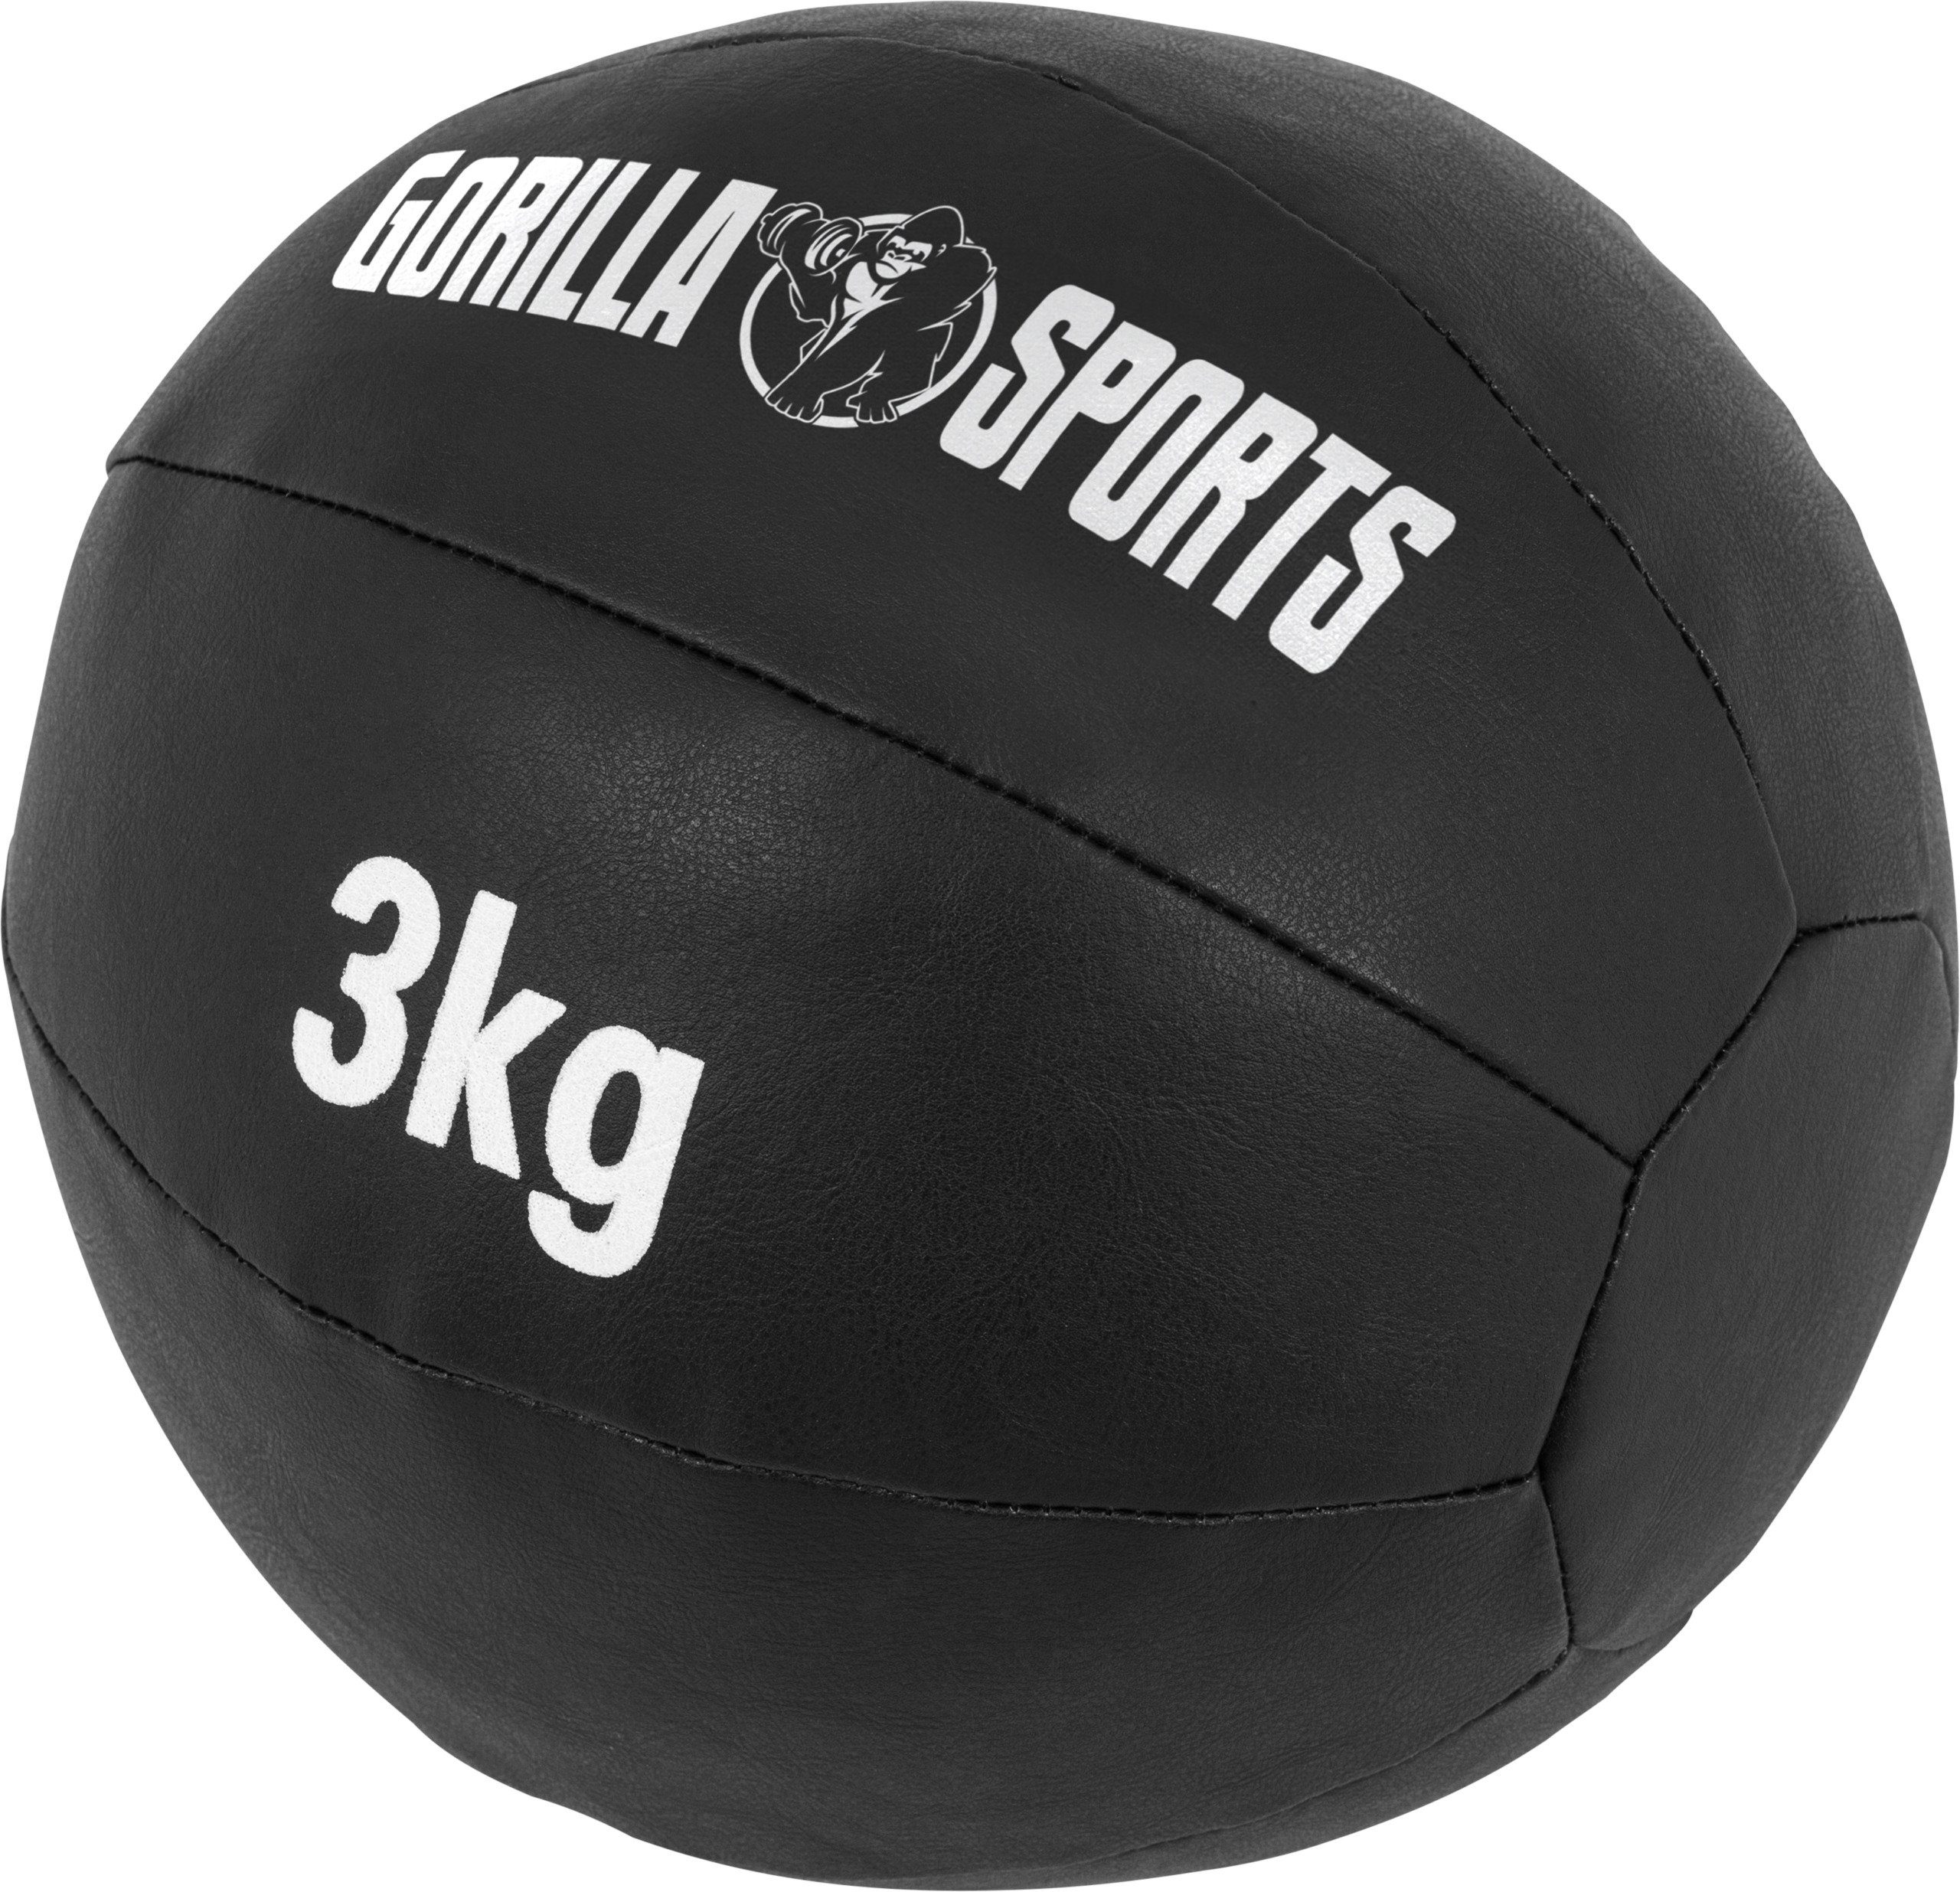 29cm, Trainingsball, GORILLA SPORTS Gewichtsball Fitnessball, Leder, Medizinball Einzeln/Set, 3 aus kg